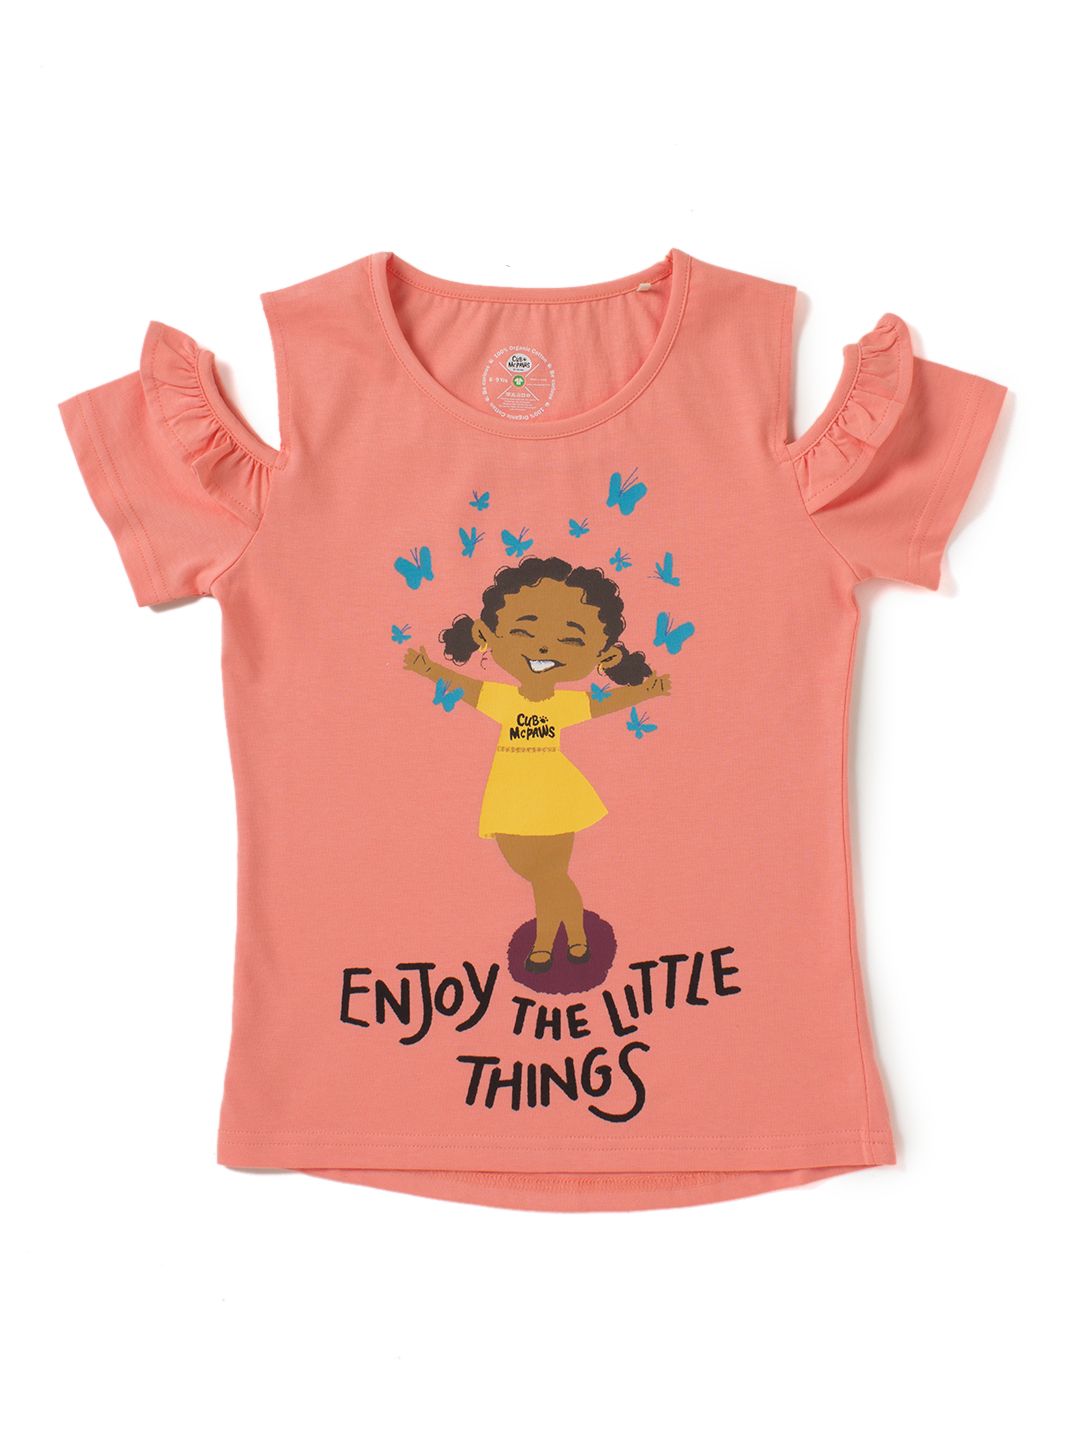 Terra by Cub McPaws - Girls Pink 100% Organic T-shirt GOTS Certified